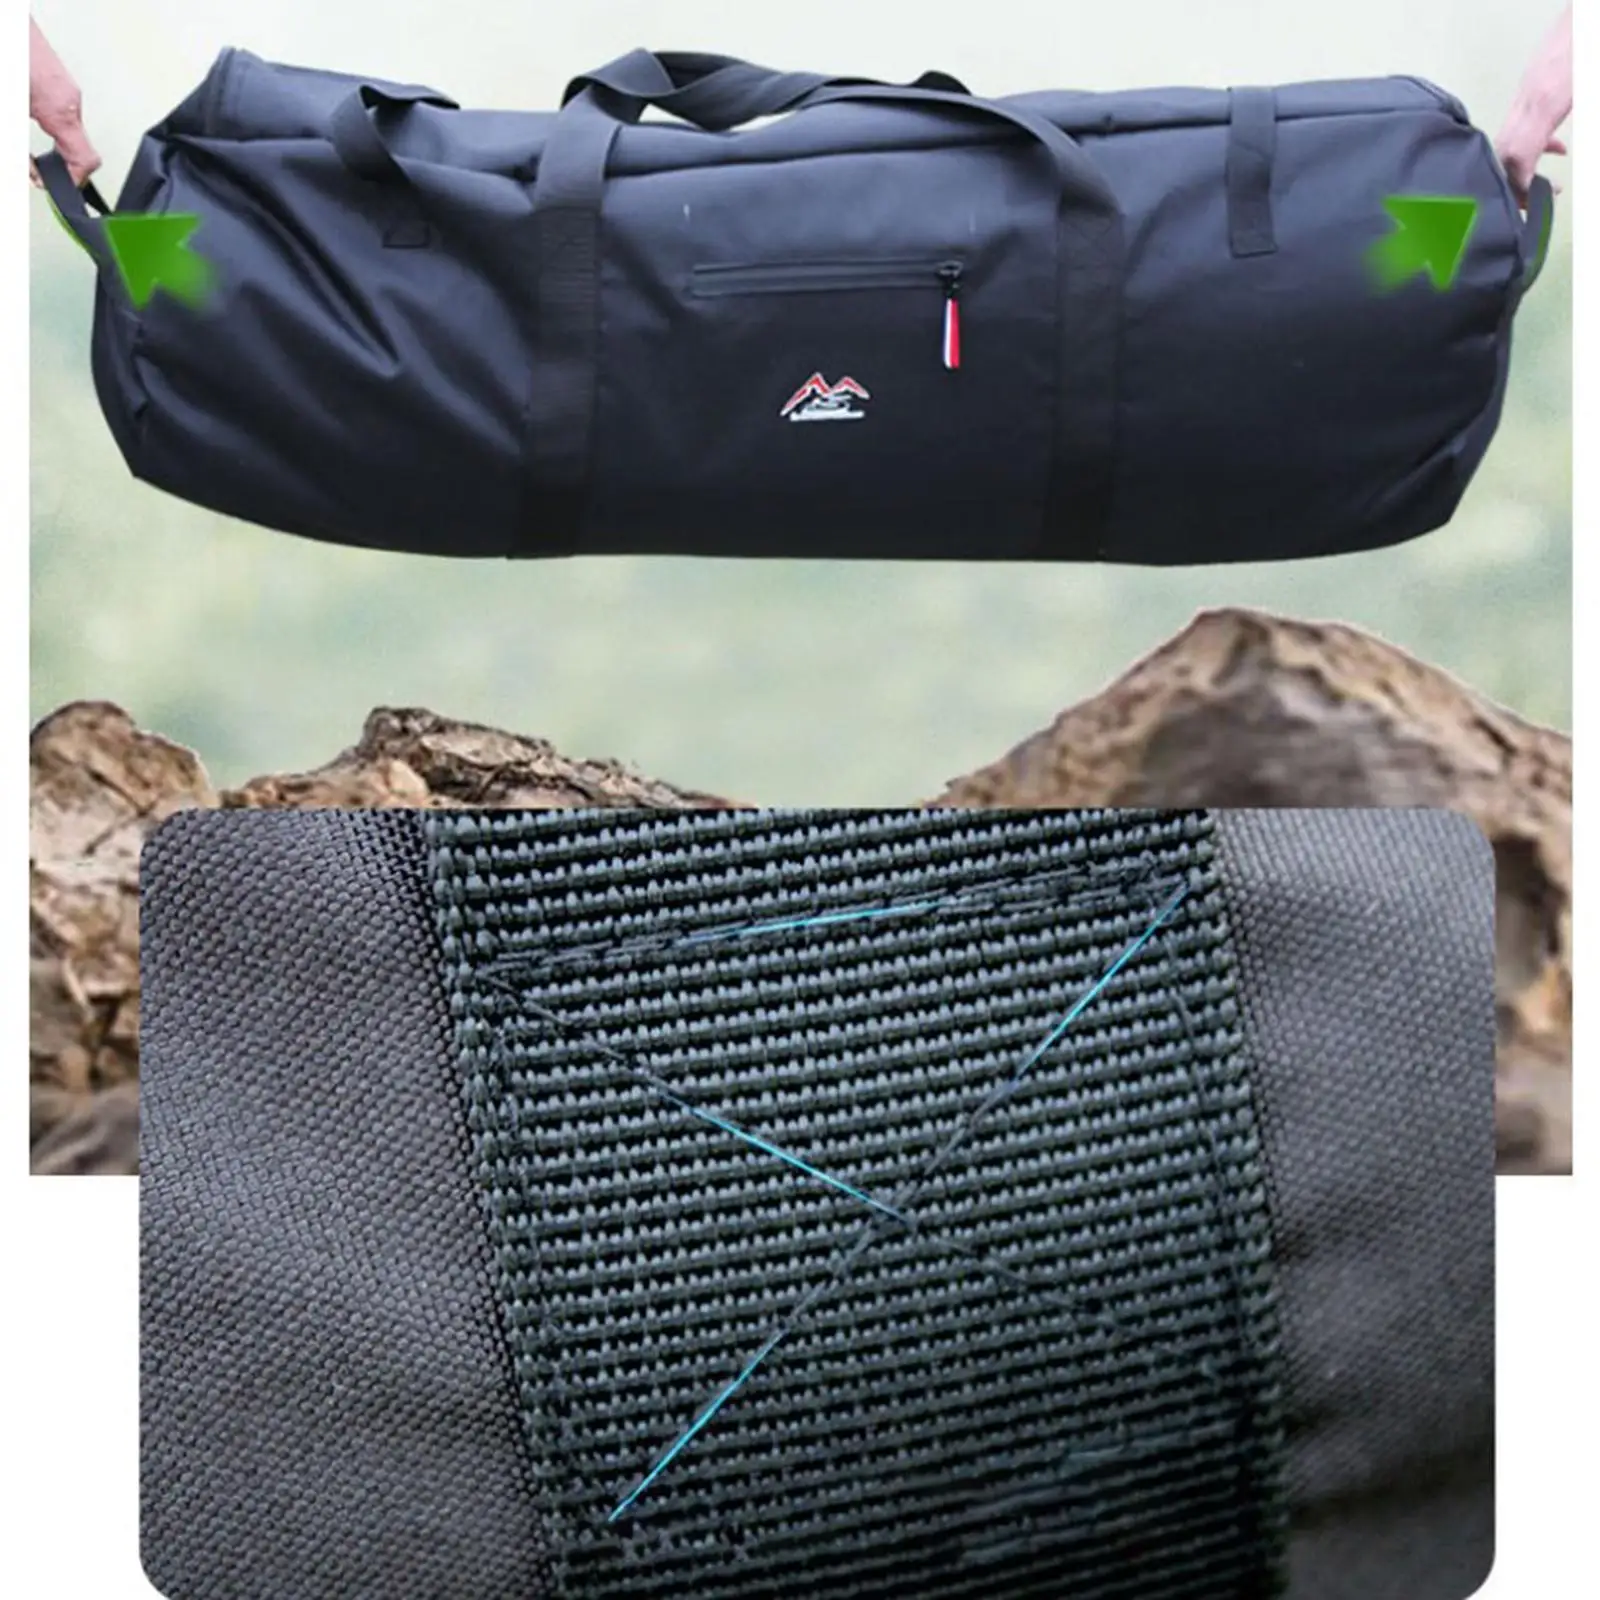 Camping Tent Storage Bag XL Wear Resistant Organizer for Fishing Hiking Yard